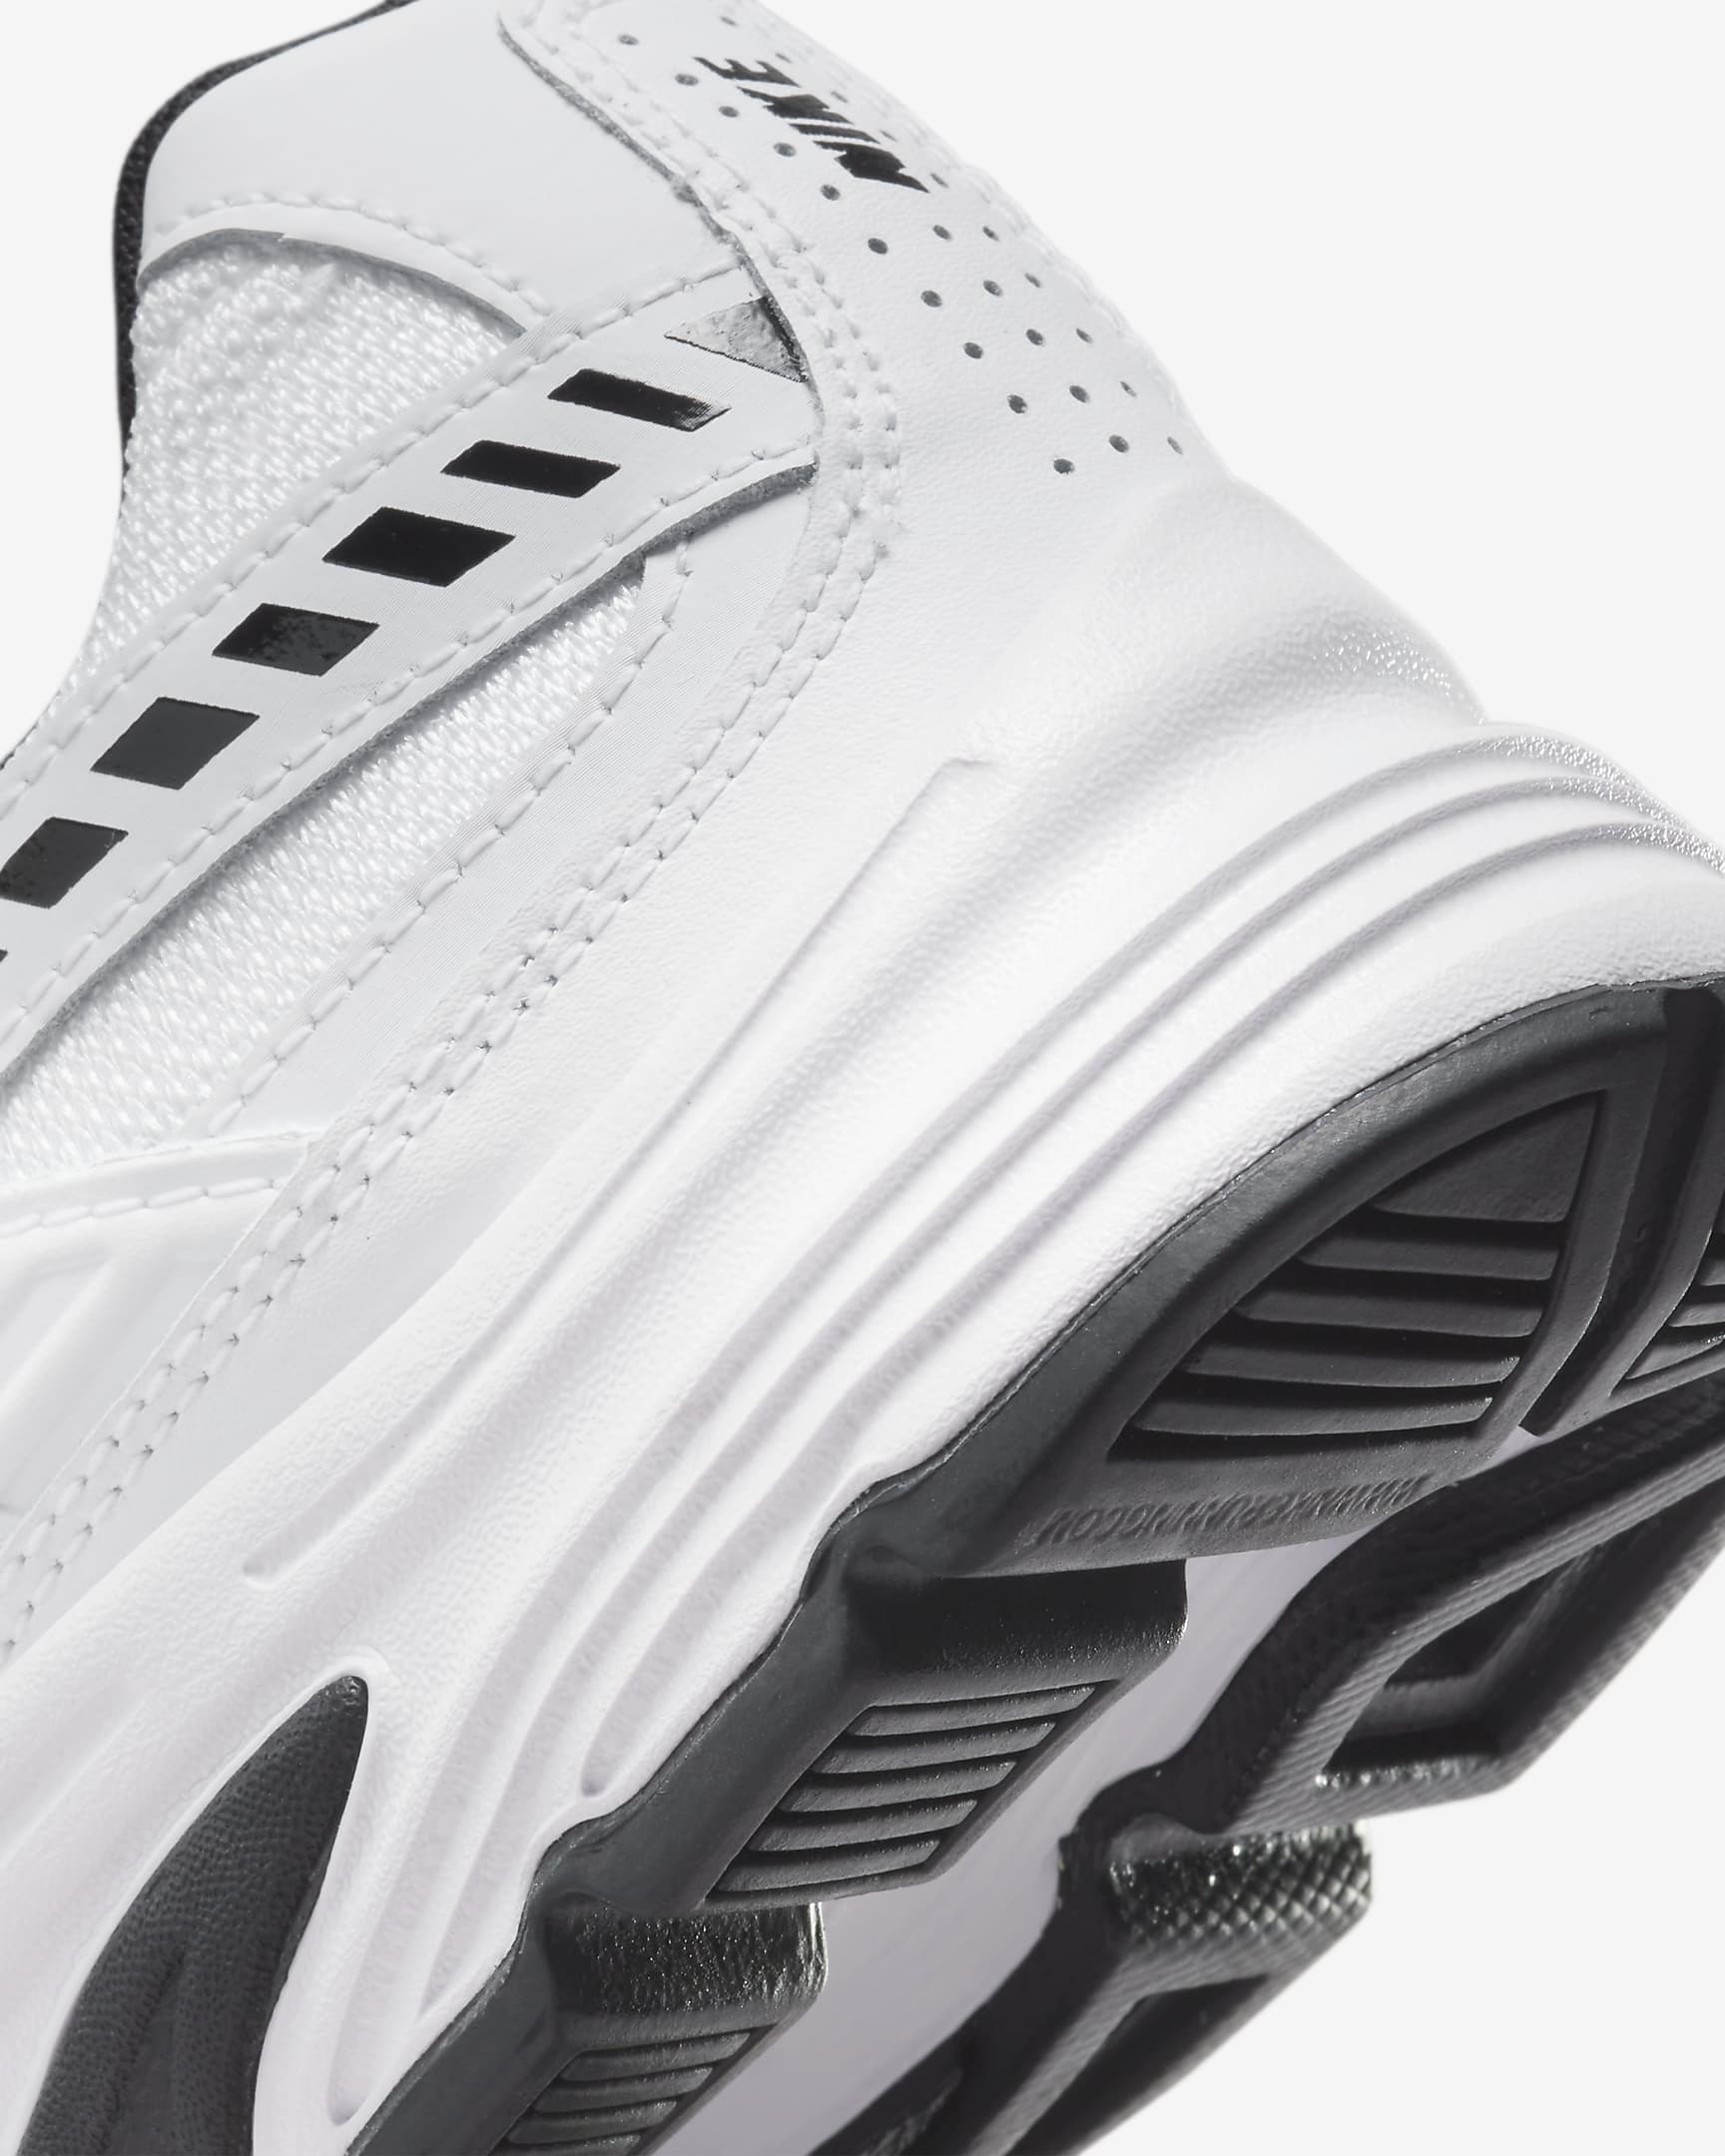 Chaussure Nike Initiator pour femme - Blanc/Blanc/Noir/Metallic Silver